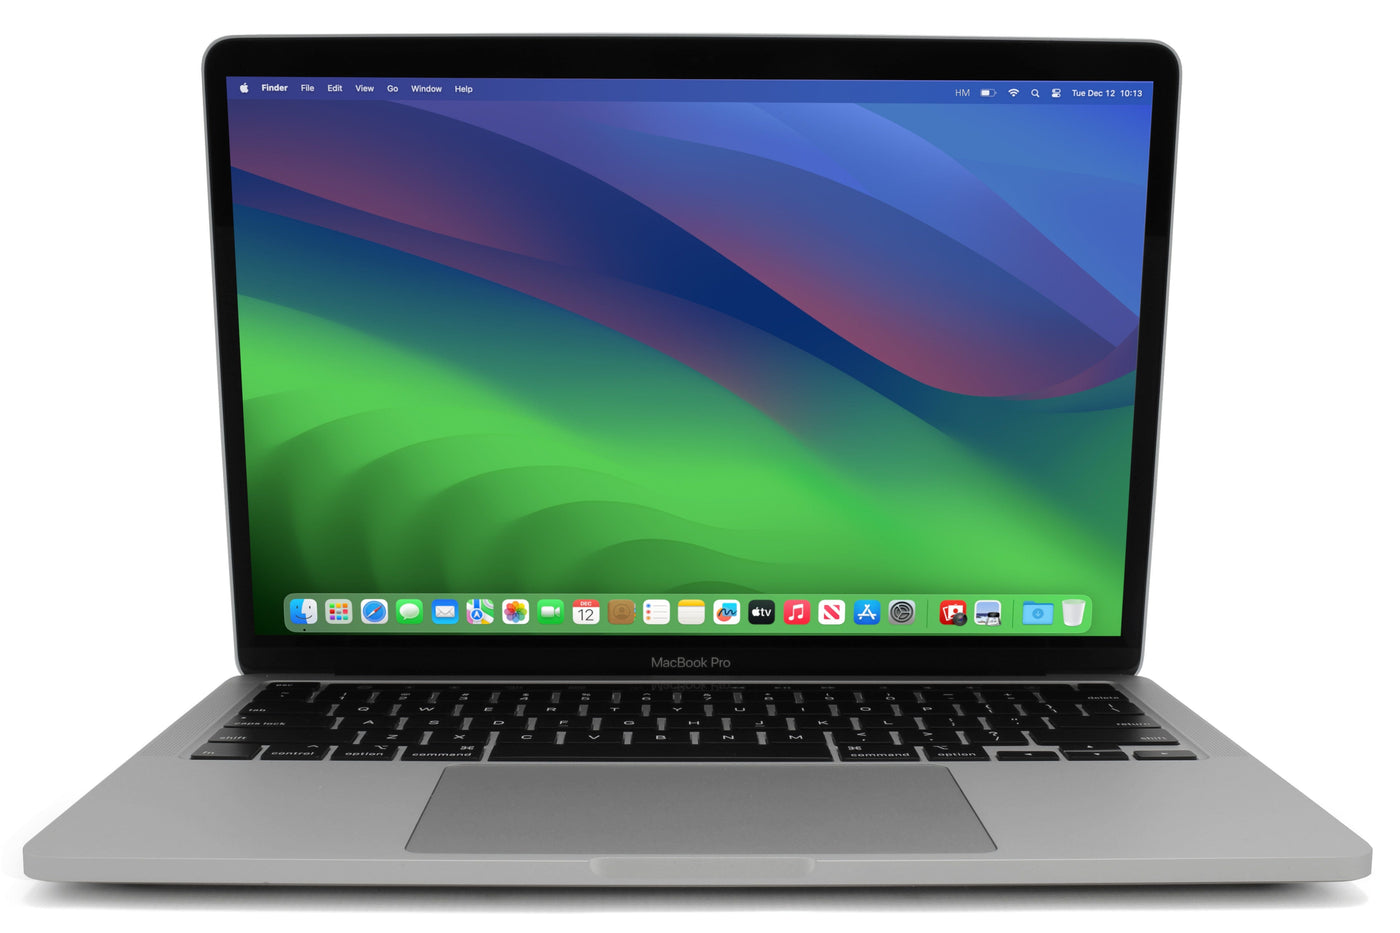 Apple MacBook Pro 13-inch MacBook Pro 13-inch Core i5 2.3GHz (Silver, Mid 2018) - Good